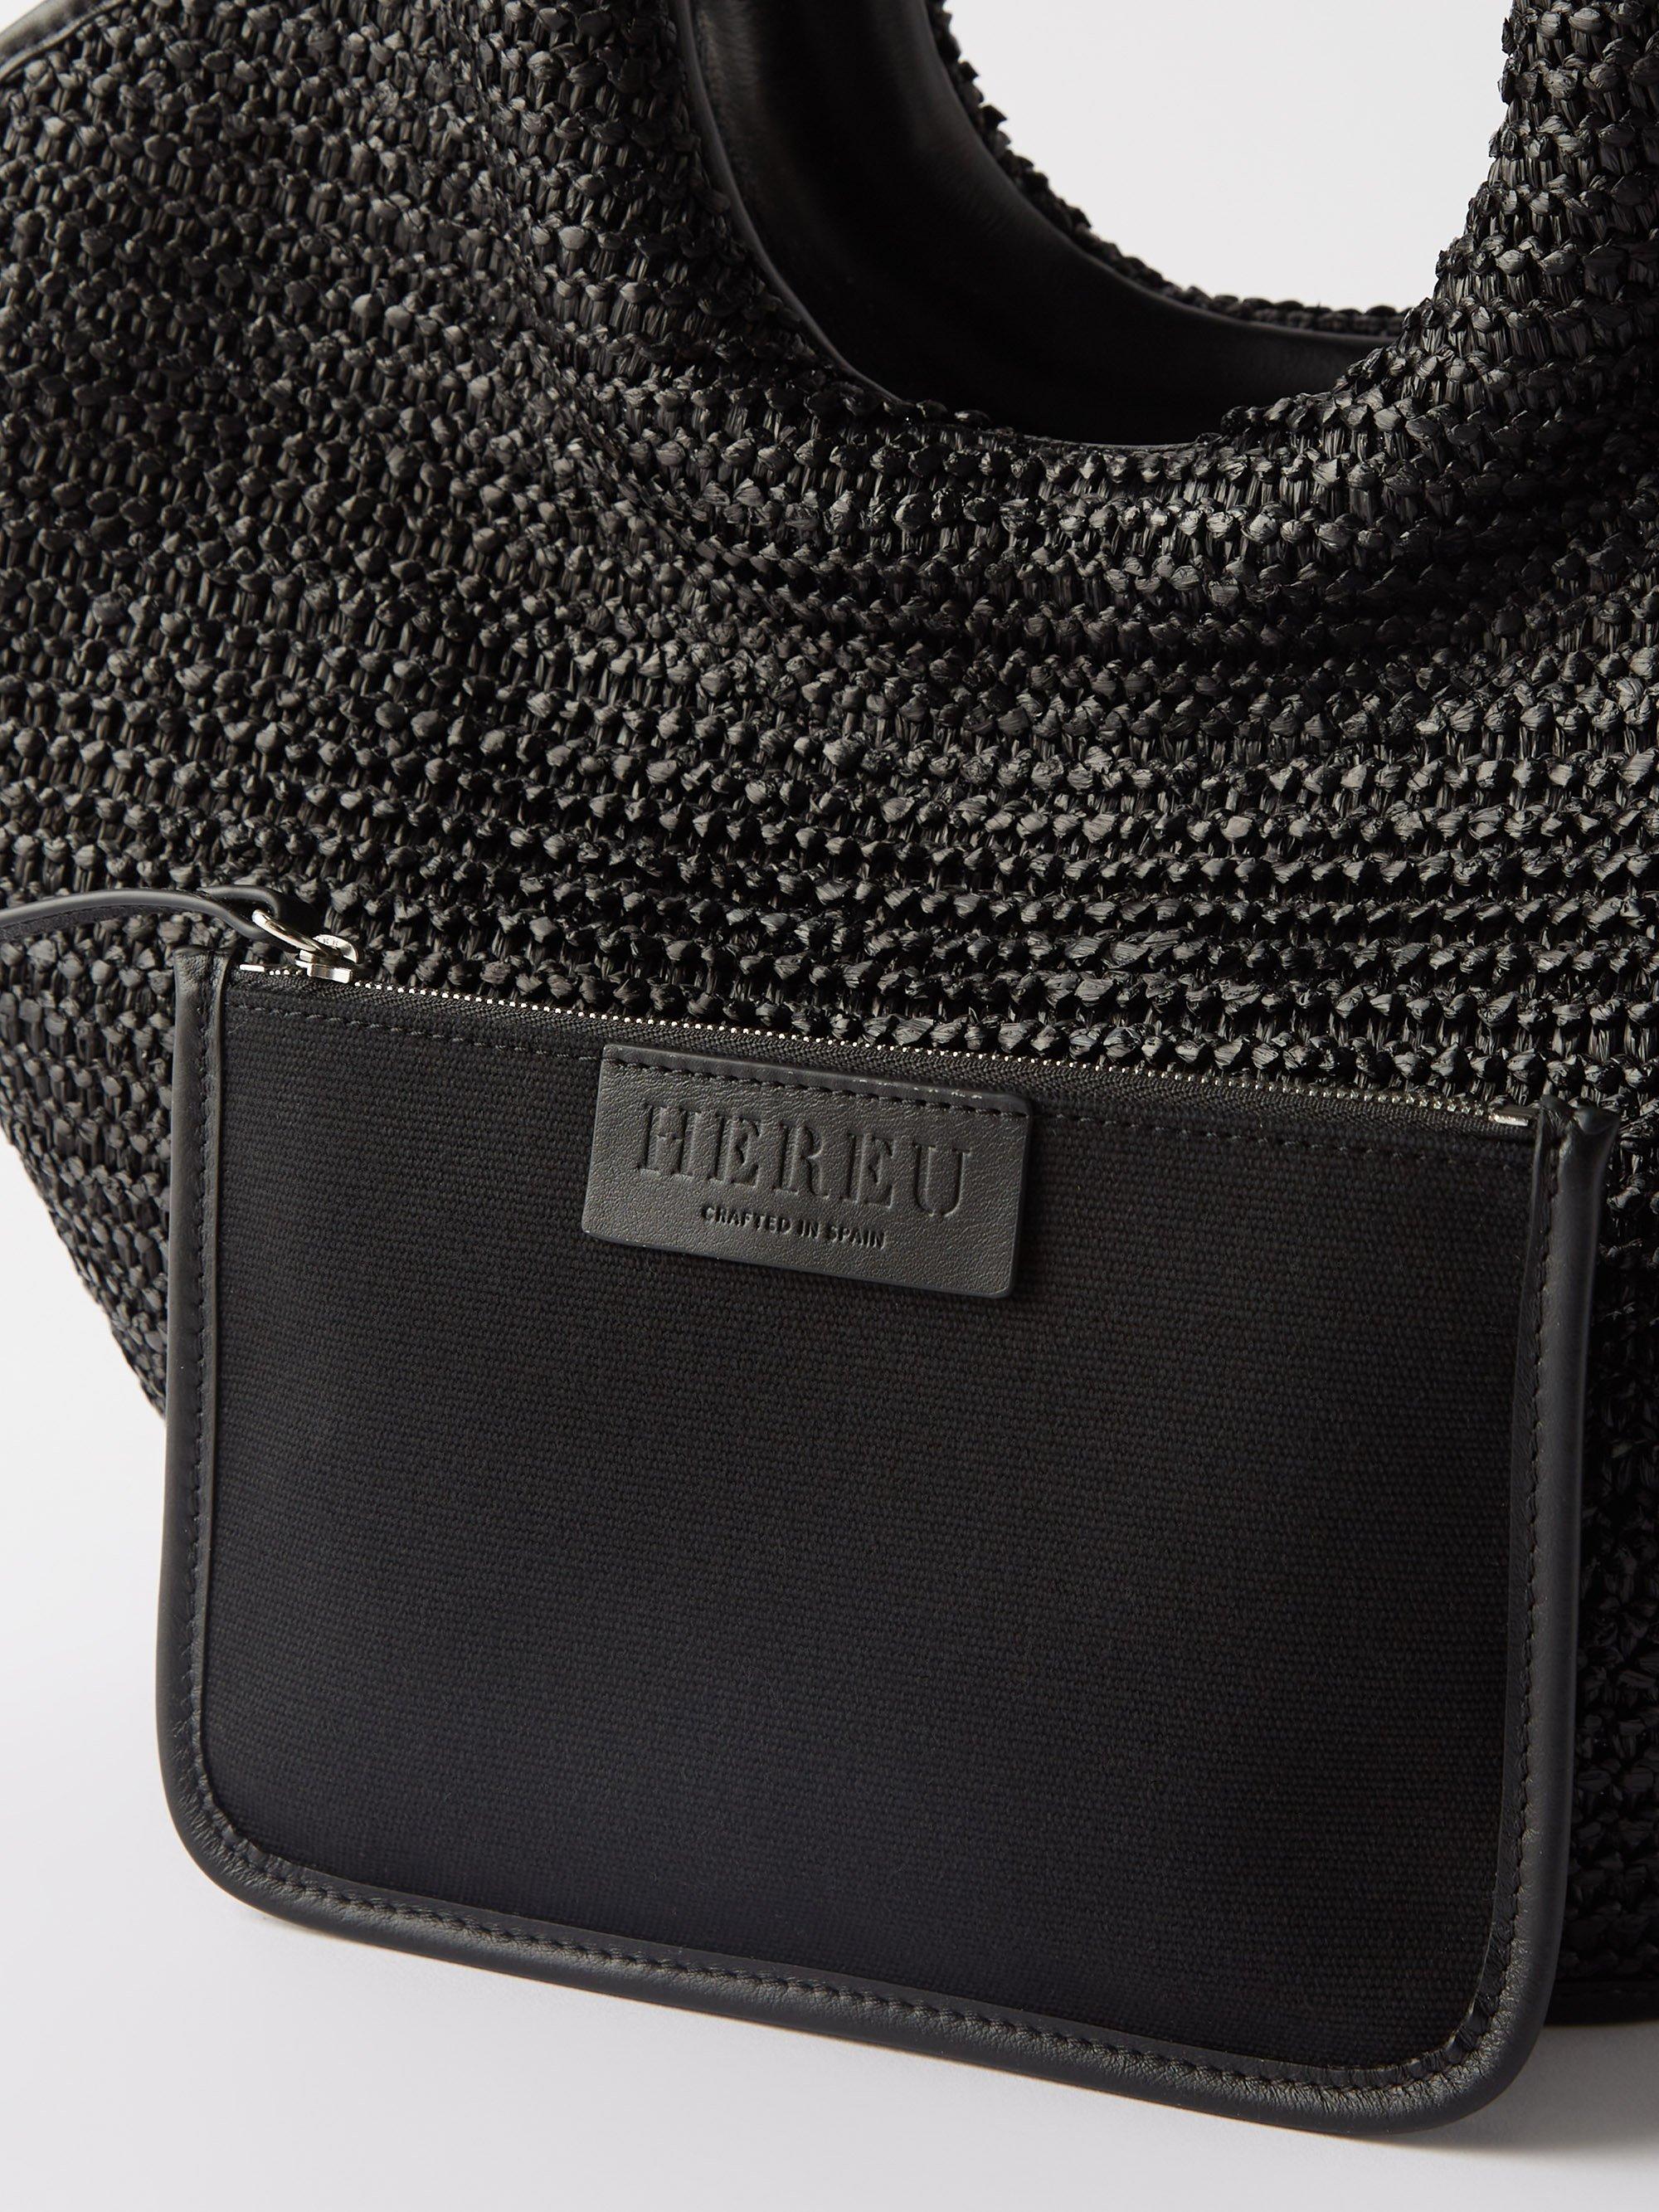 Hereu Castell Leather And Raffia Tote Bag in Black